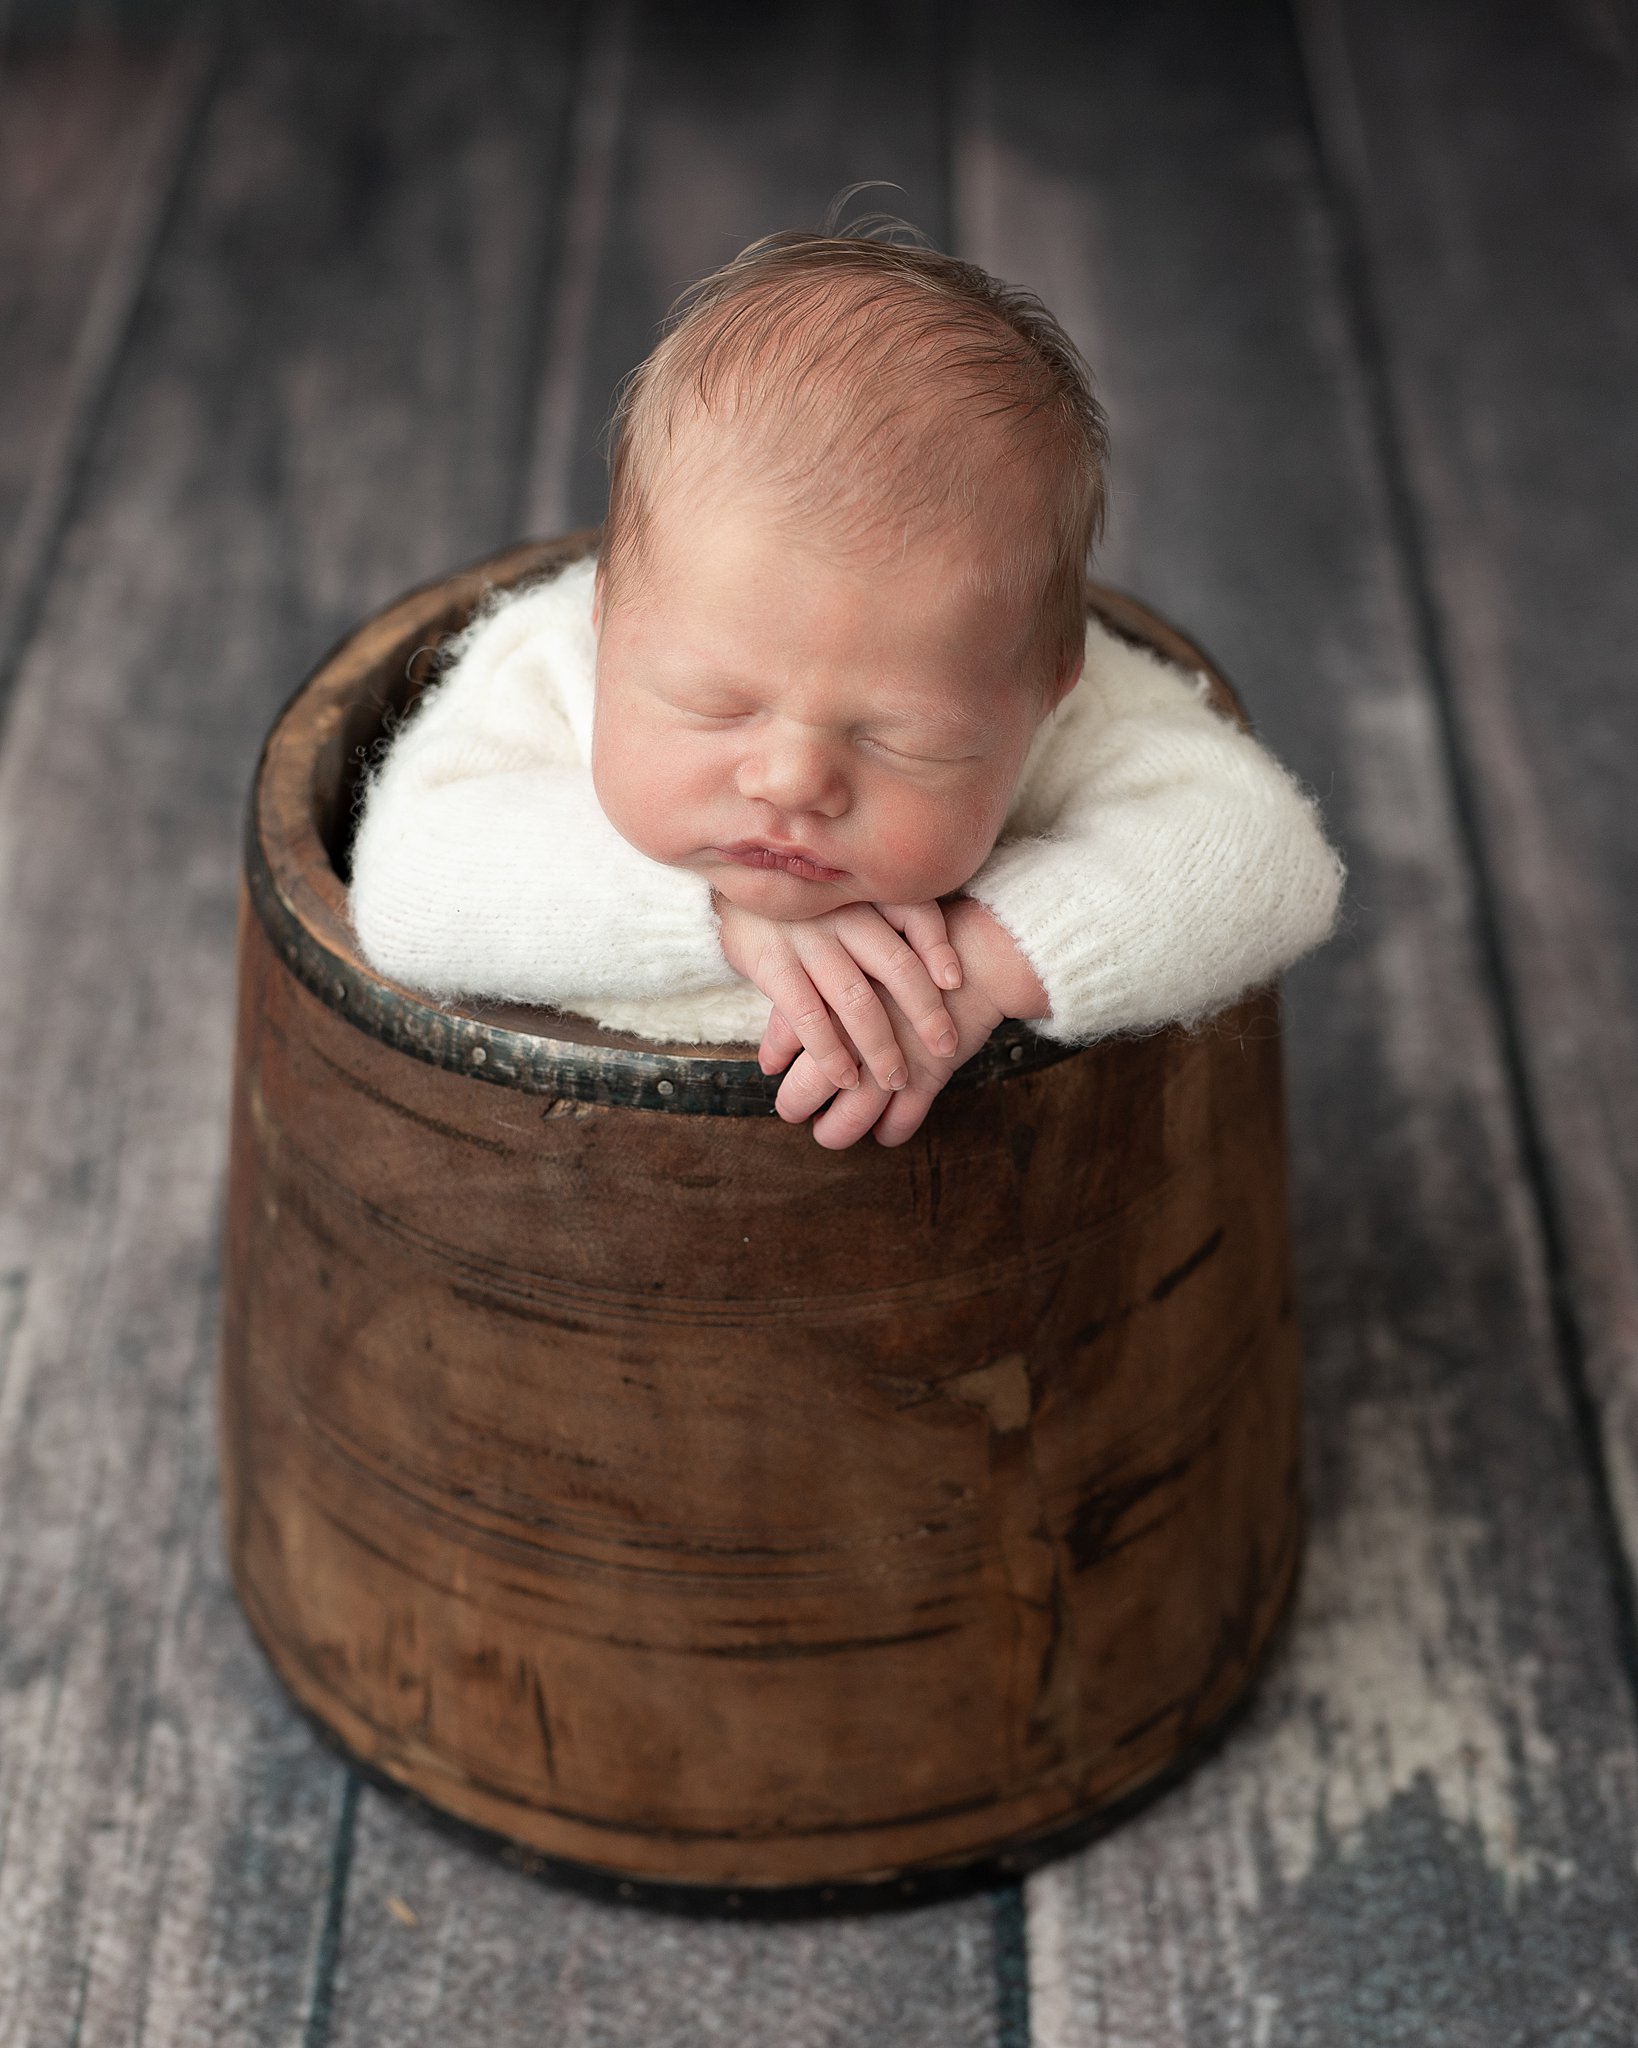 a newborn baby sleeps on it's hands inside a wooden bucket homebirth experience